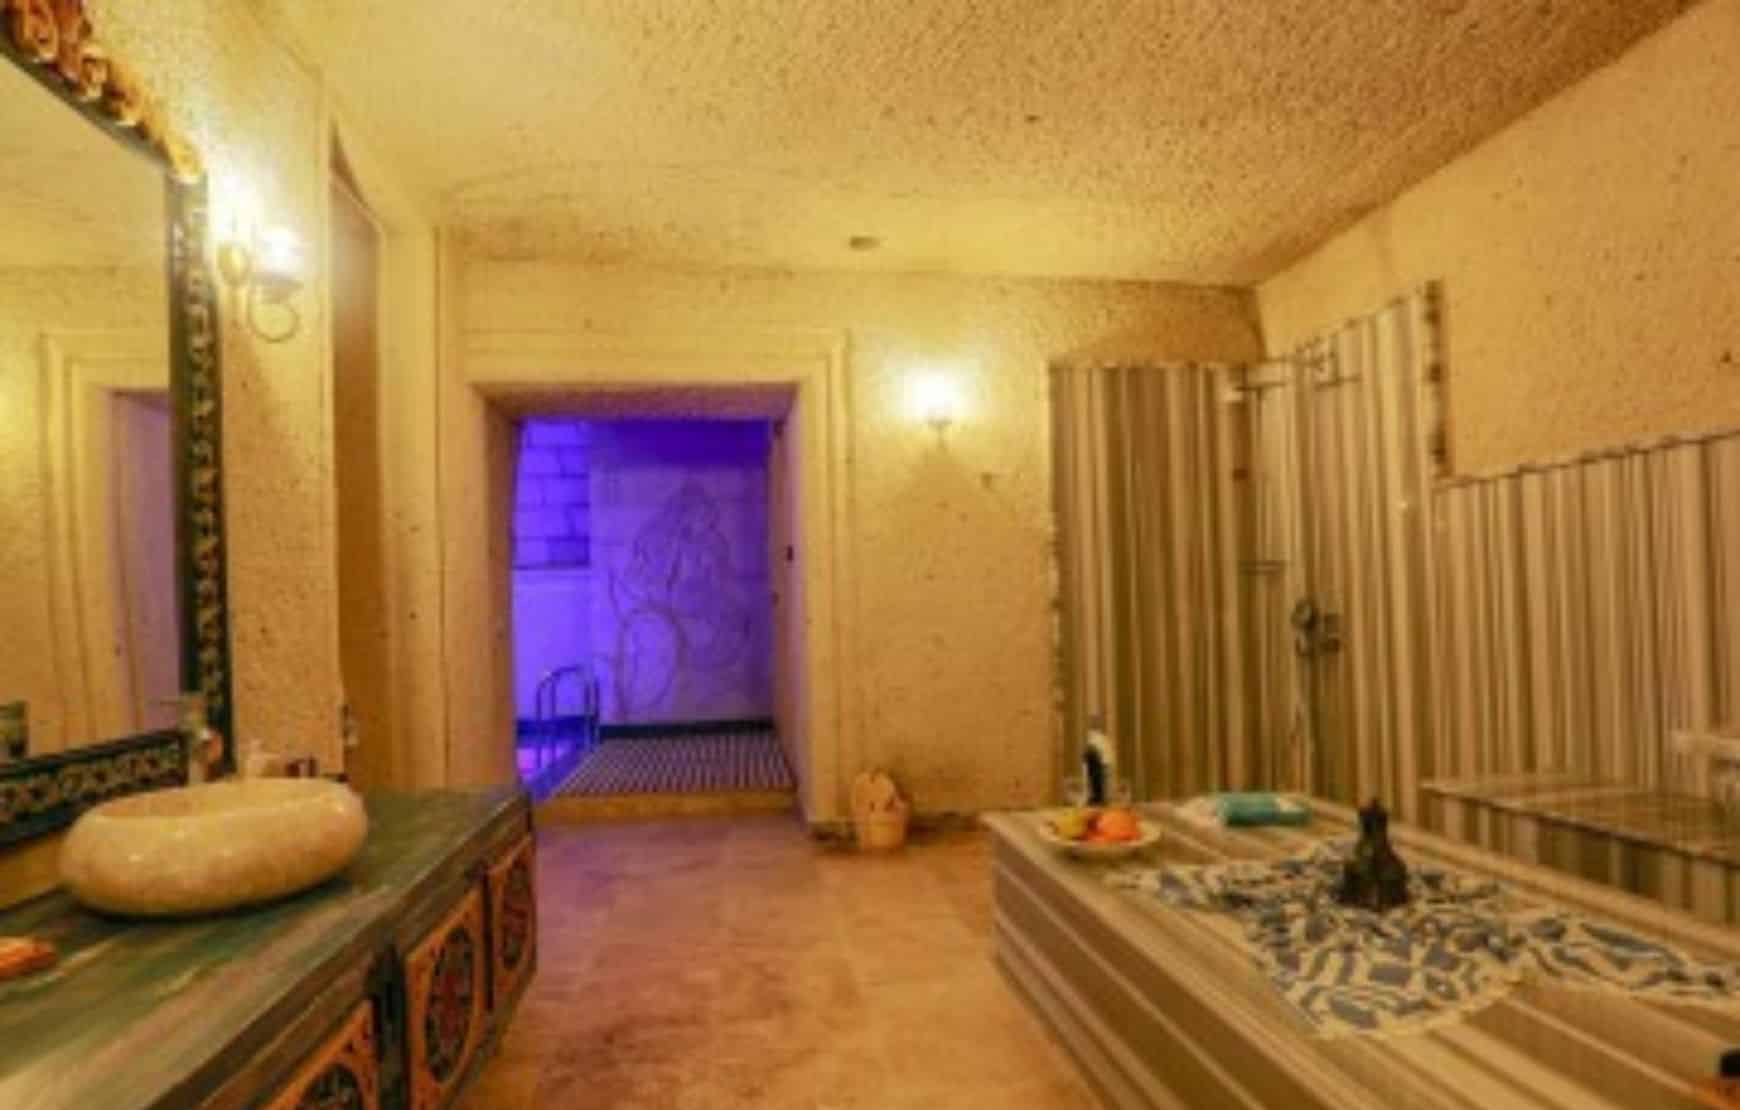 turkish bath inside of the room